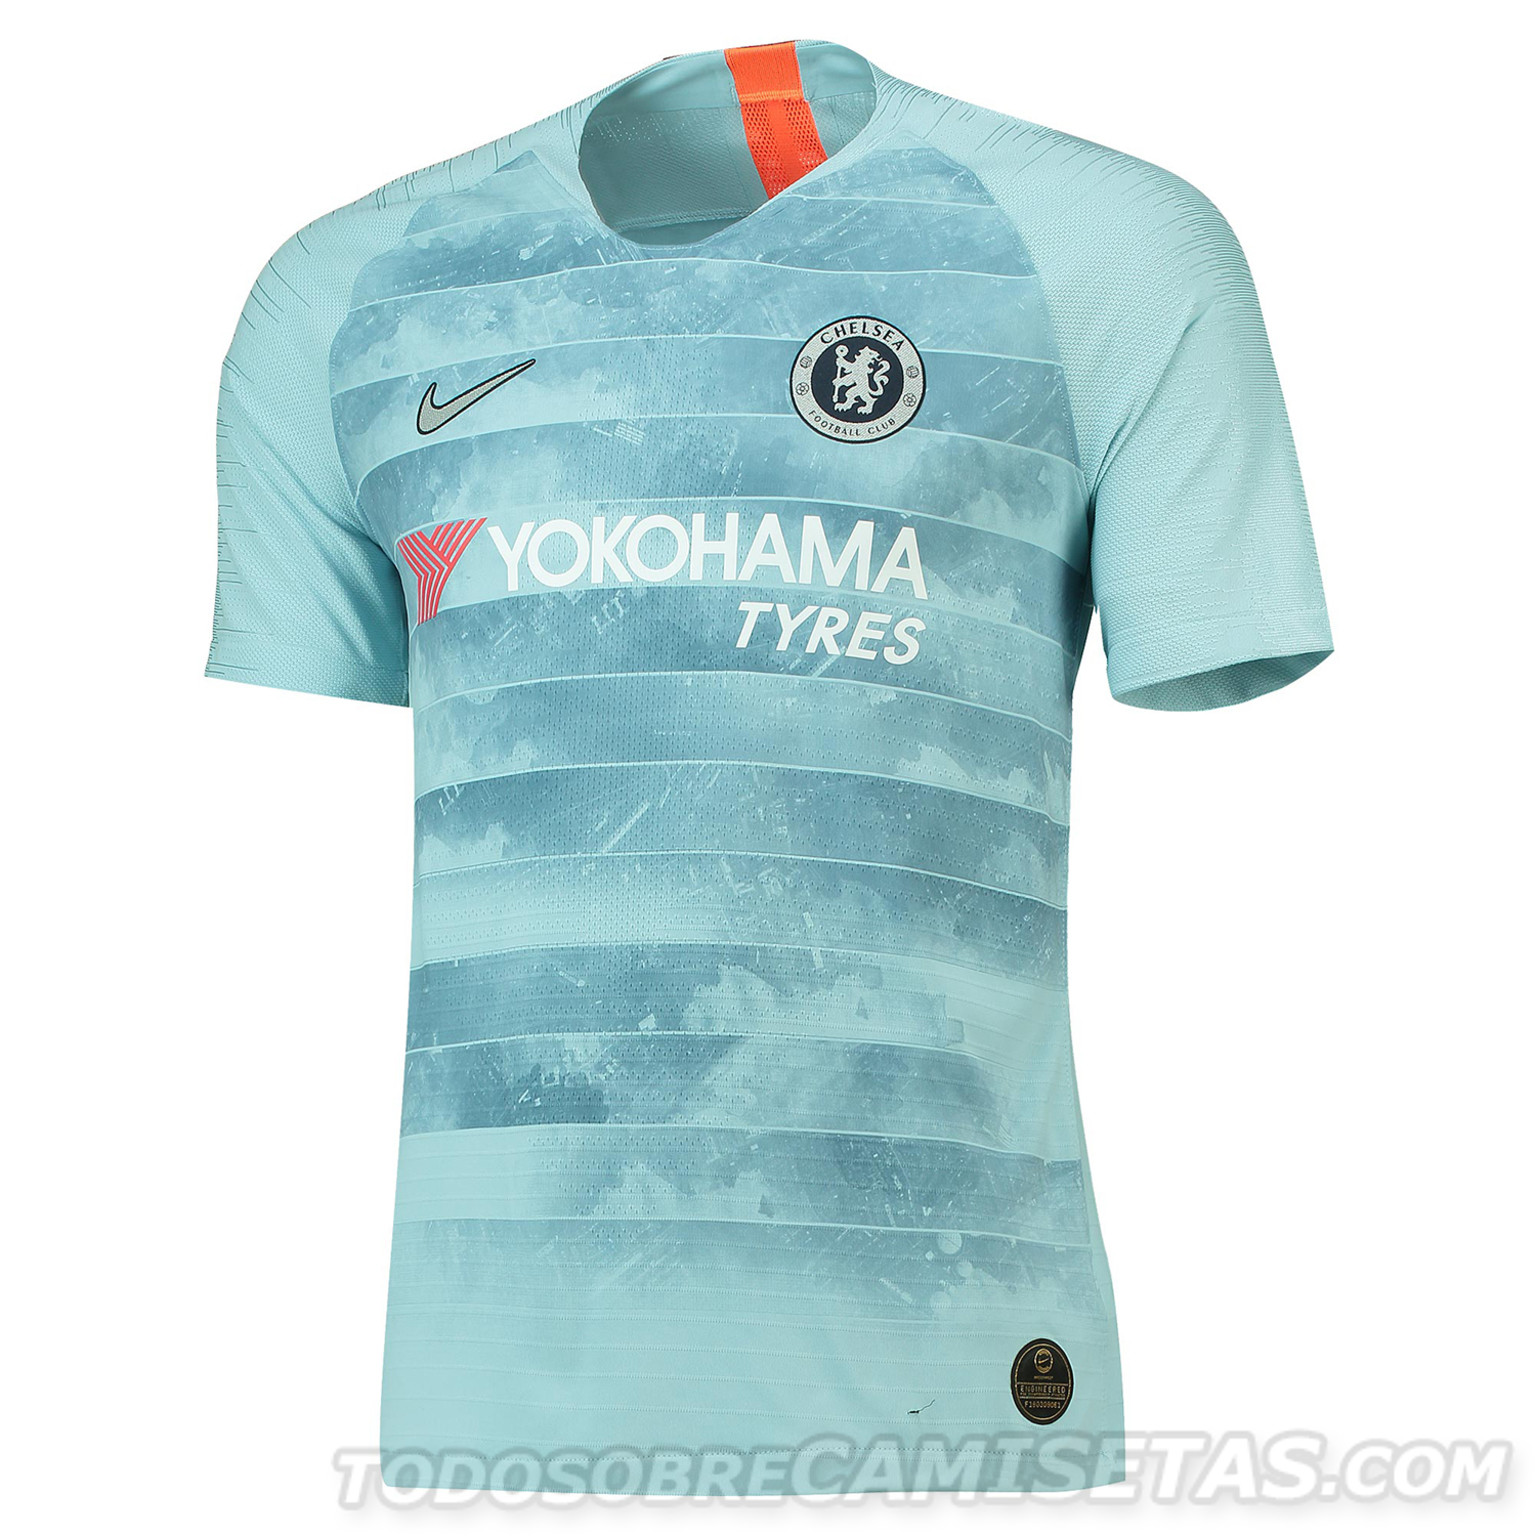 Chelsea FC Nike Third Kit 2018-19